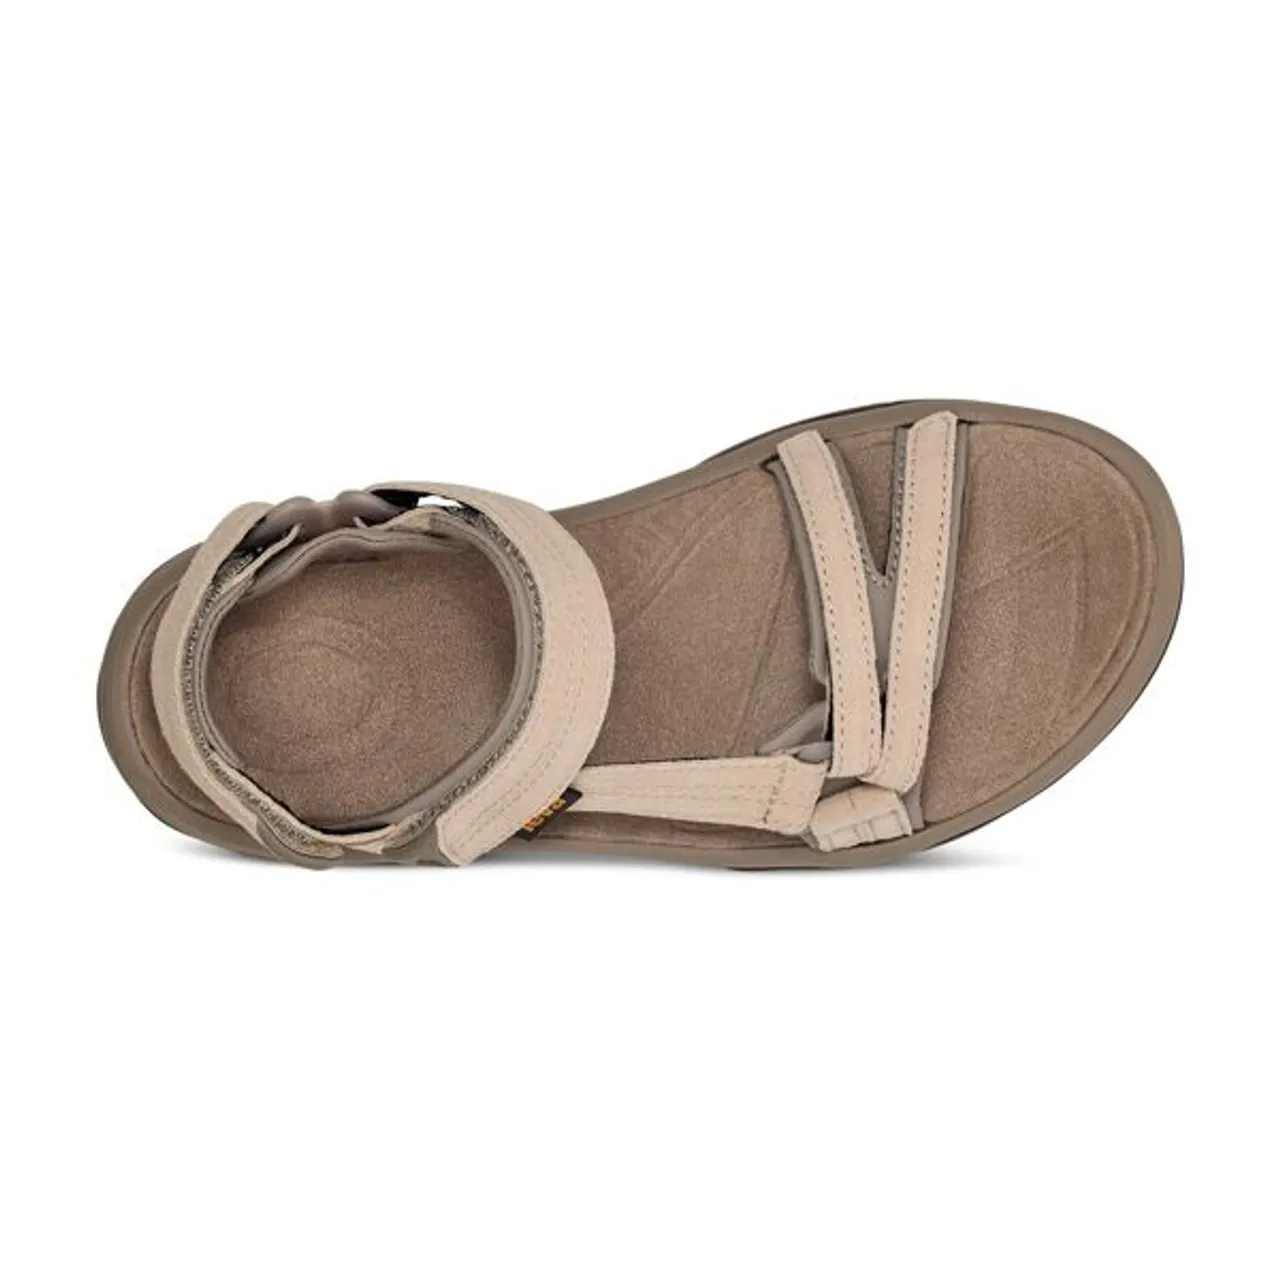 Sandale TEVA "Terra Fi Lite Suede" Gr. 38, grau (feather grey) Schuhe Damen-Outdoorbekleidung